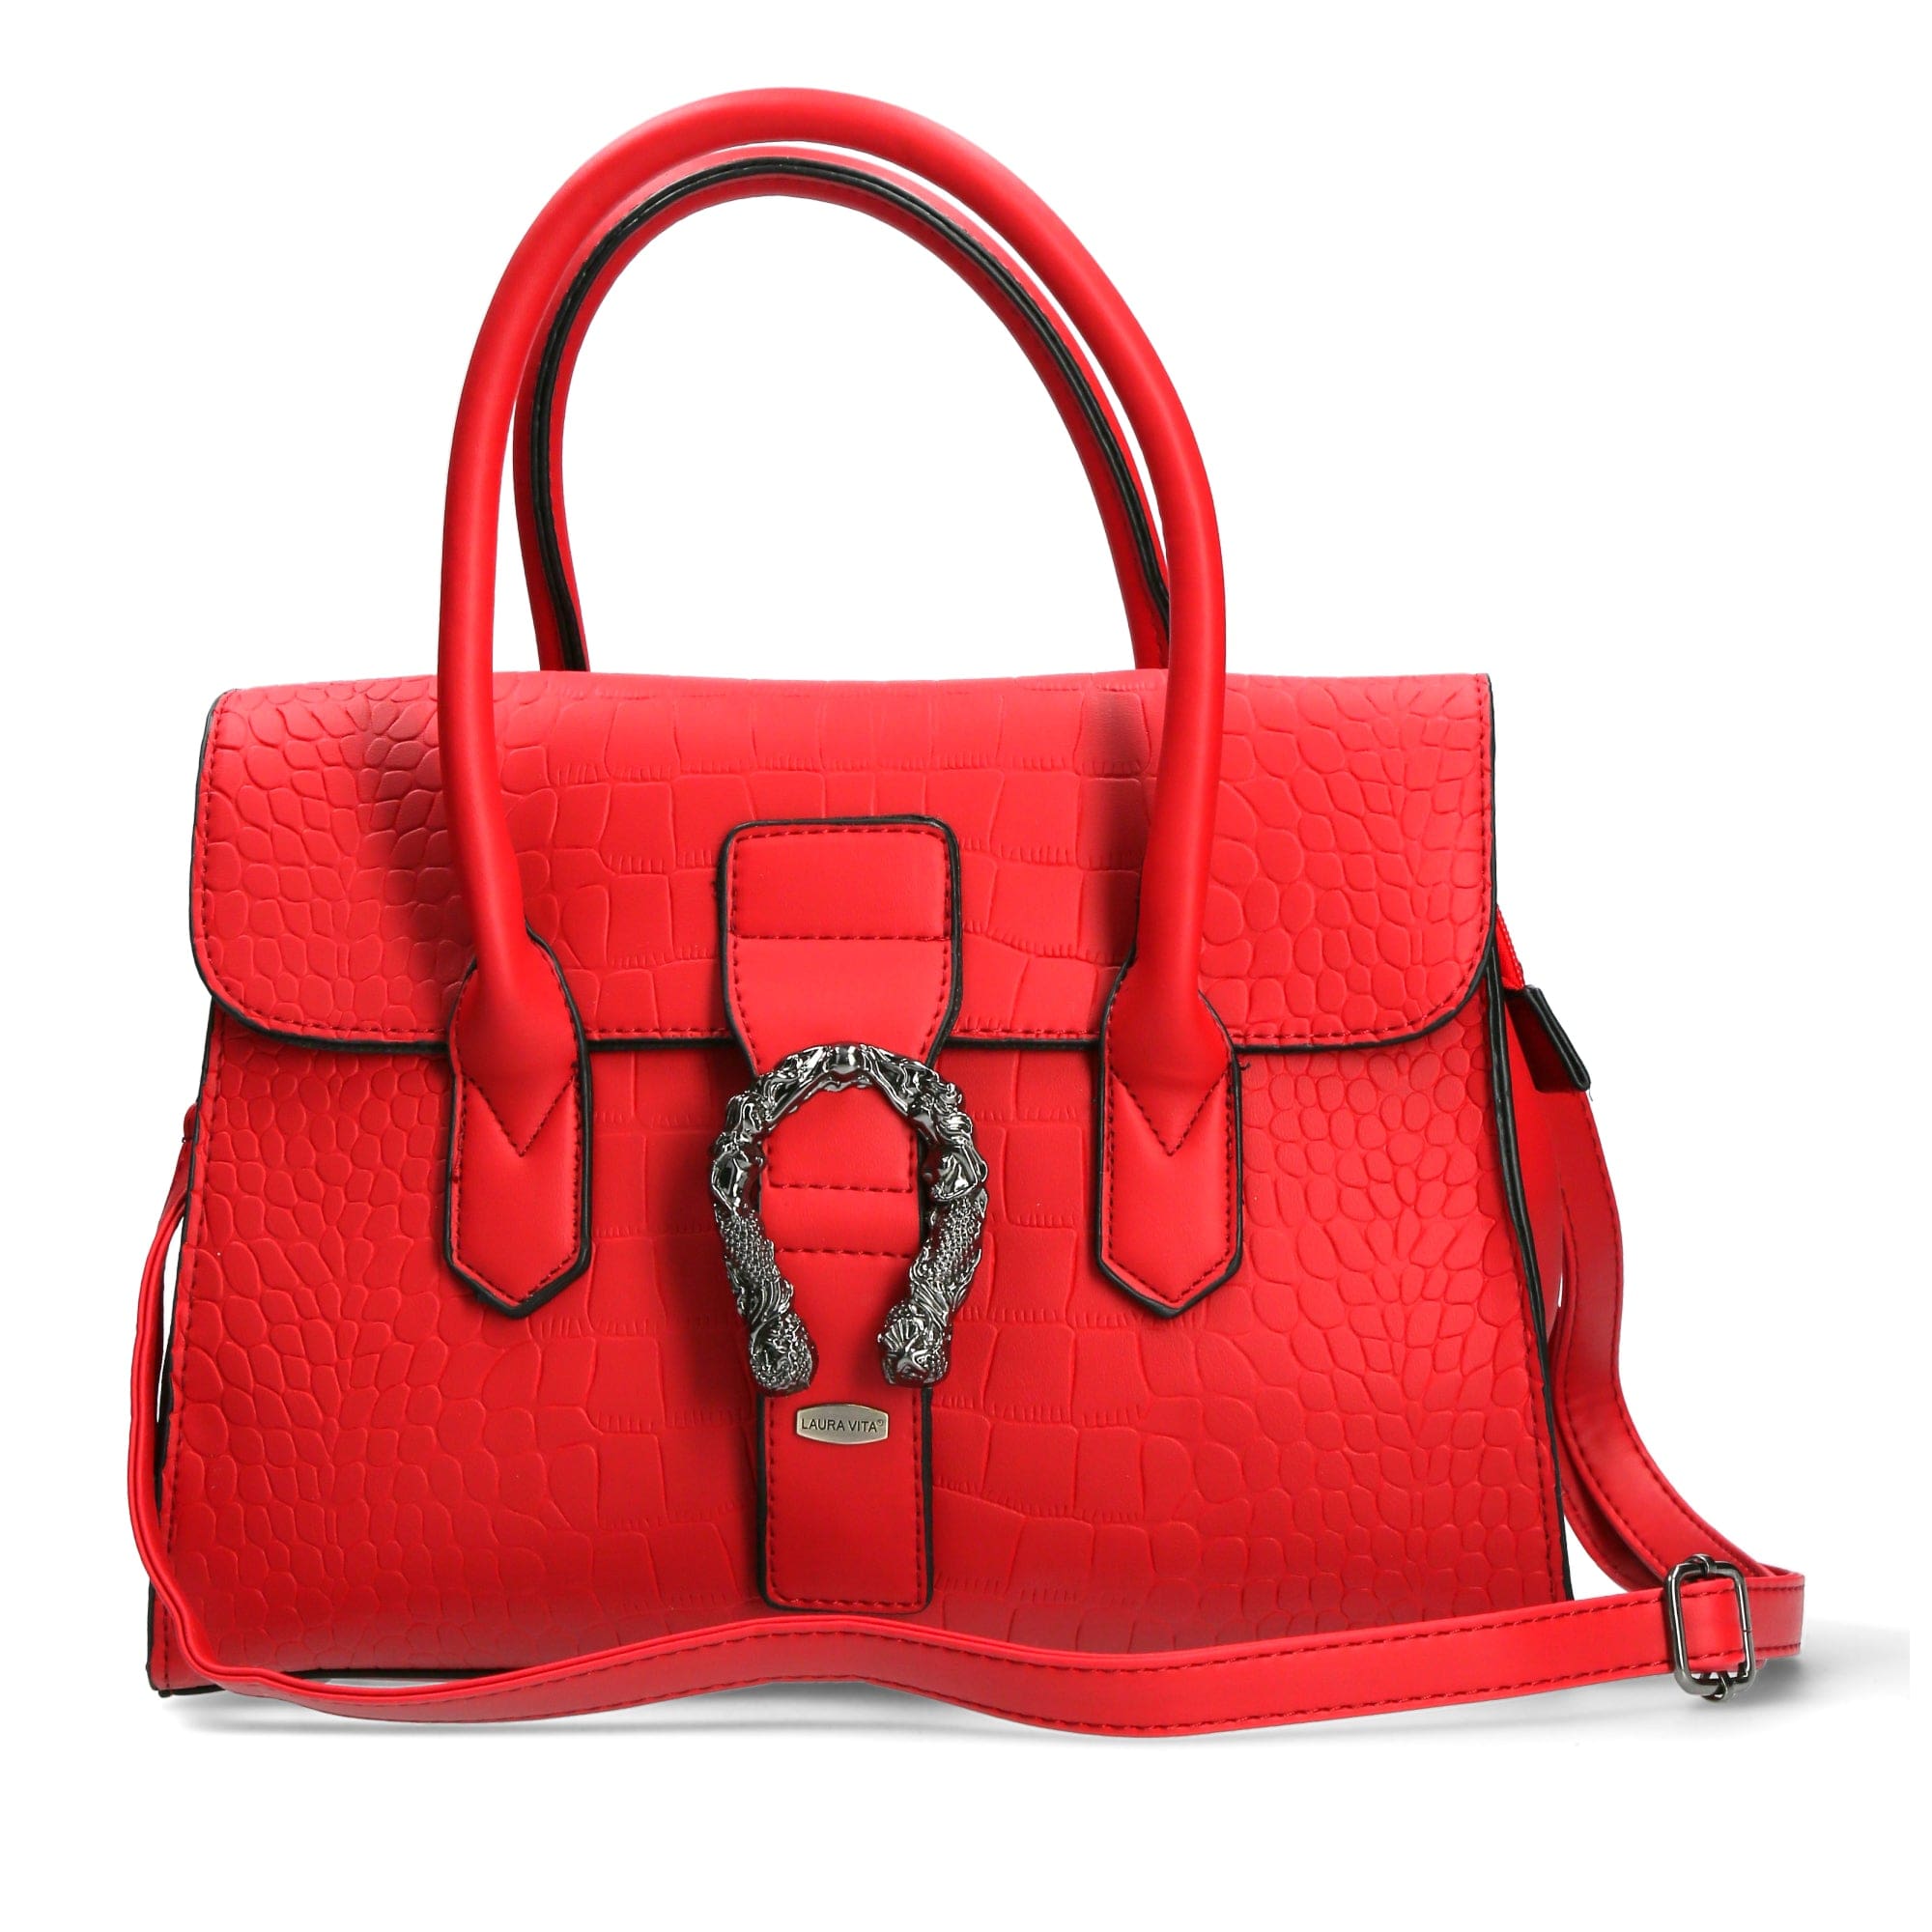 Qirdy Bag - Red - Bag